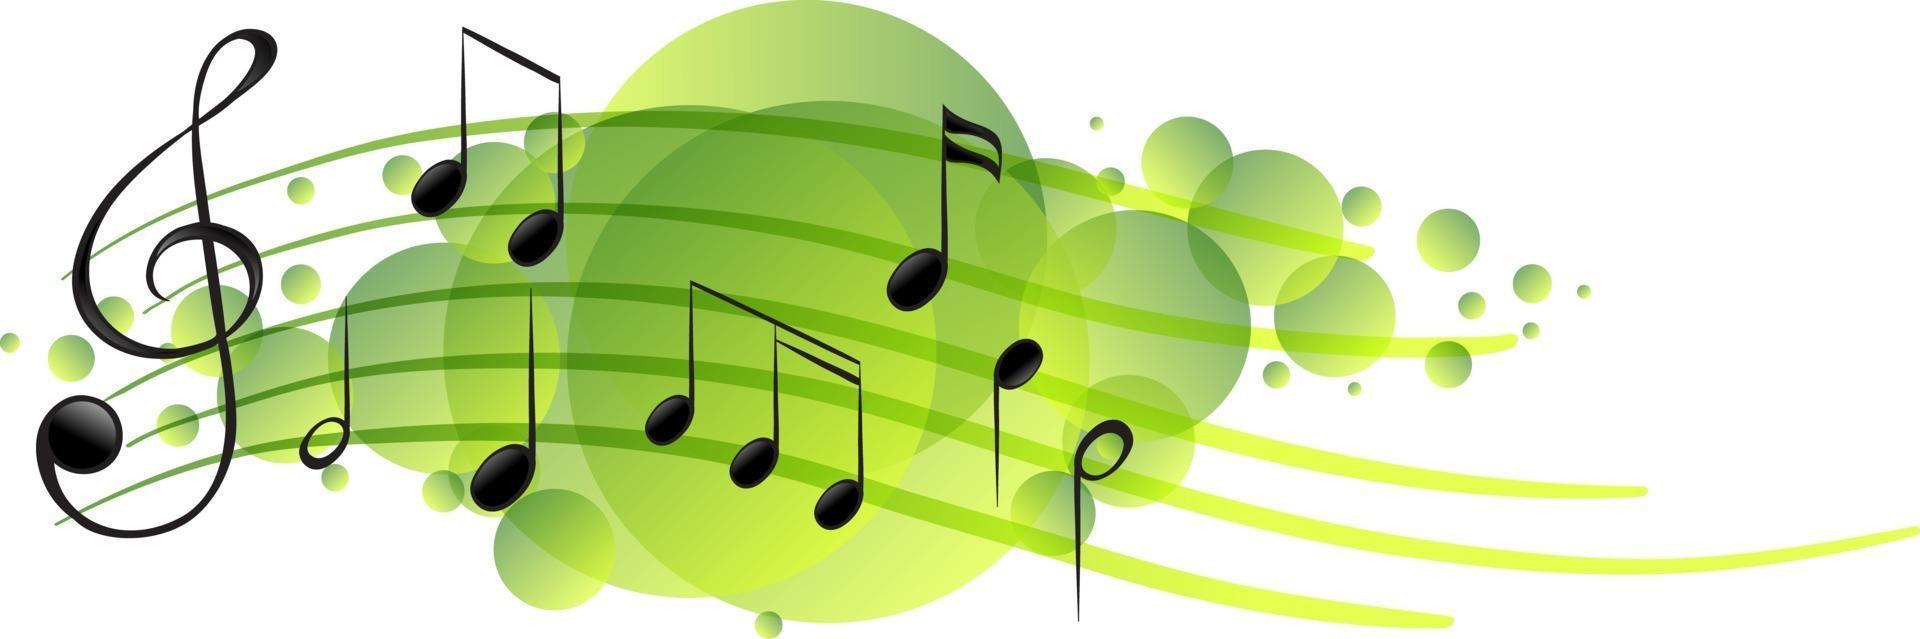 Símbolos de melodía musical en mancha verde. vector